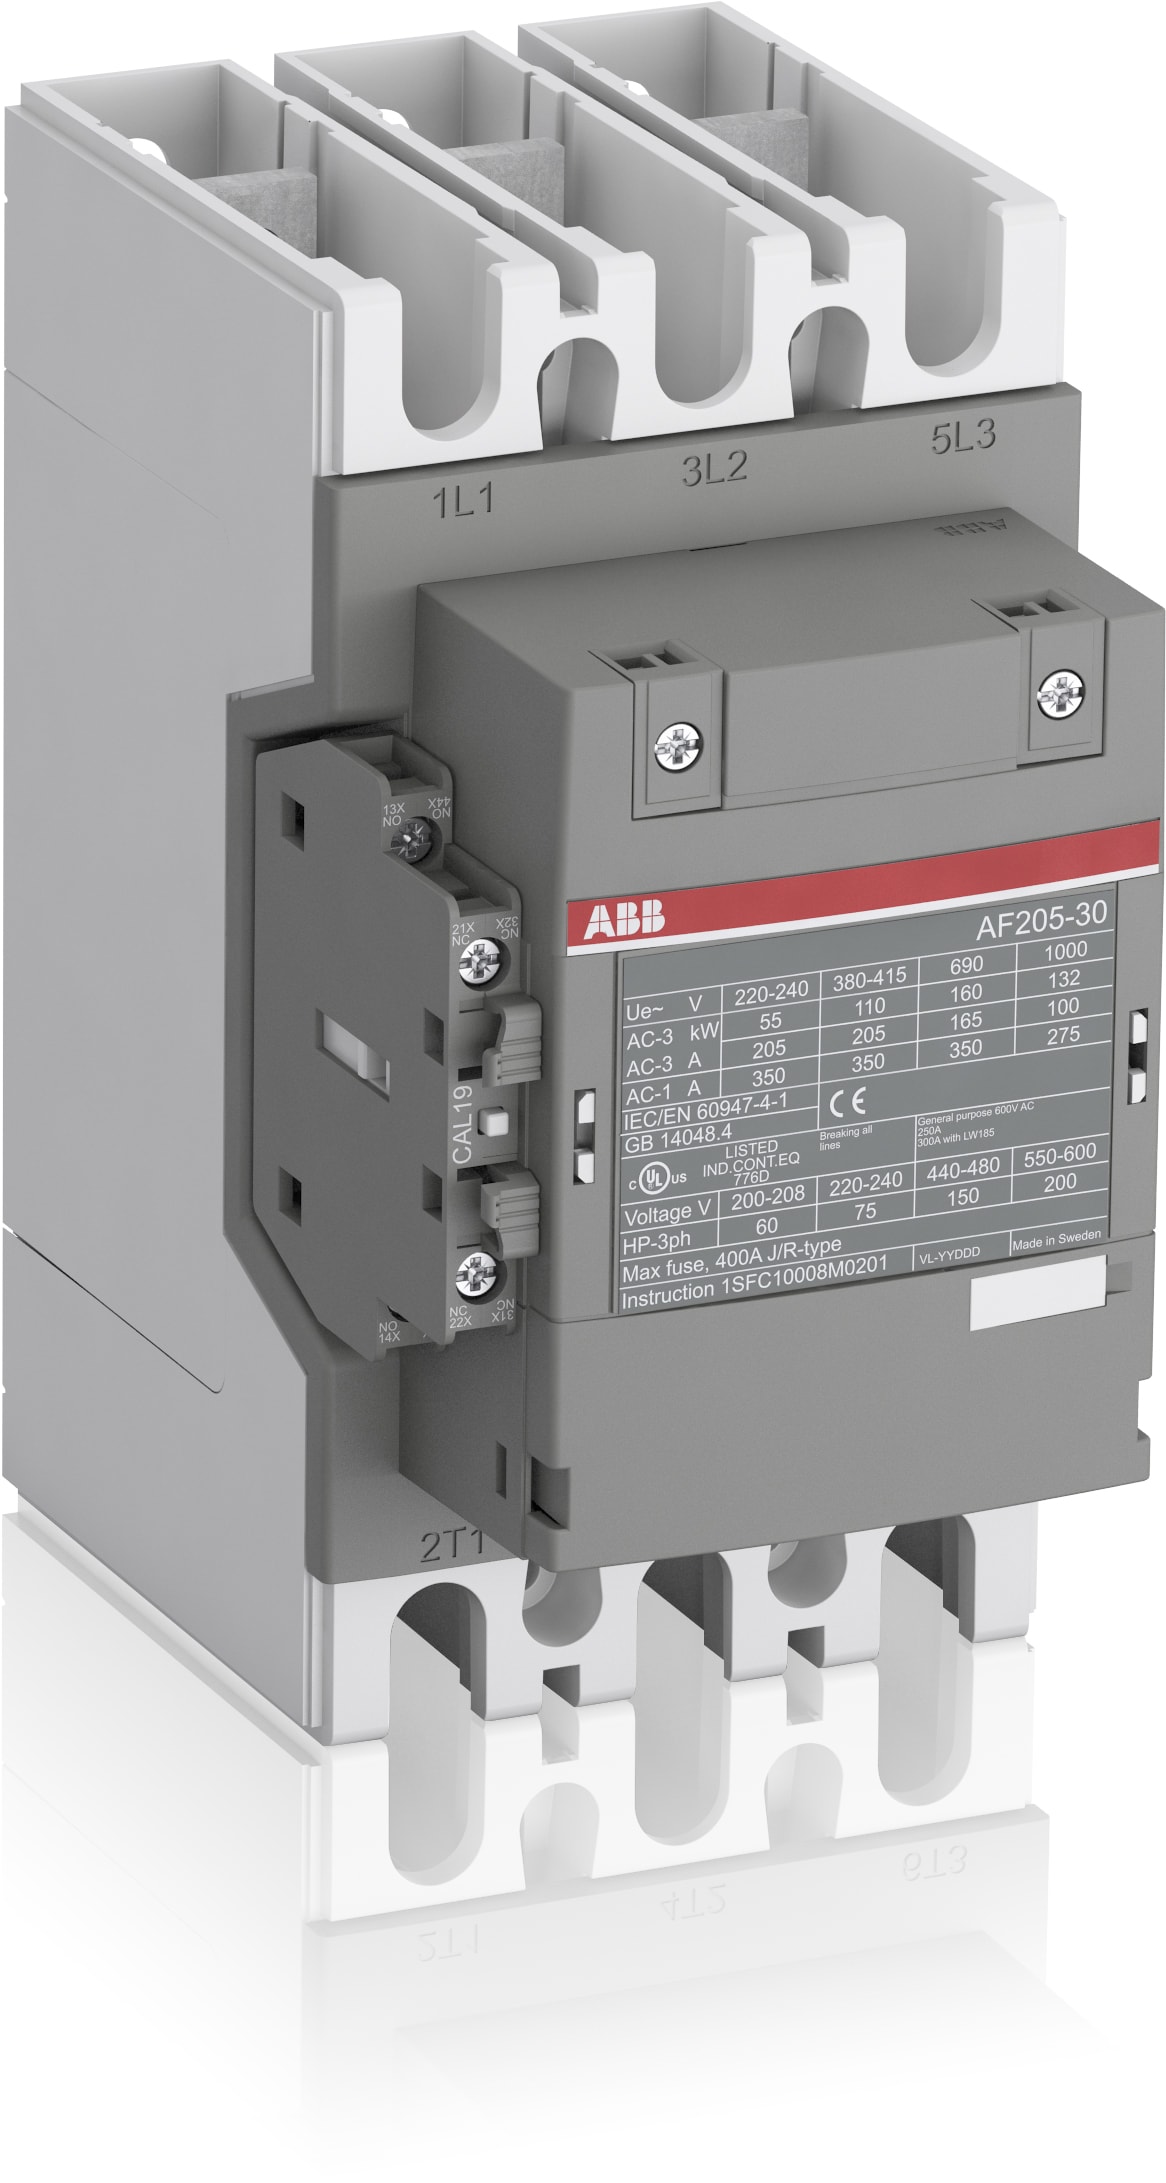 ABB Electrification - AF205-30-11-11 24-60V 50/60Hz / 20-60V DC - Kontaktor med skinnetilkobling. Med 1NO+1NC hjelpekontakt.